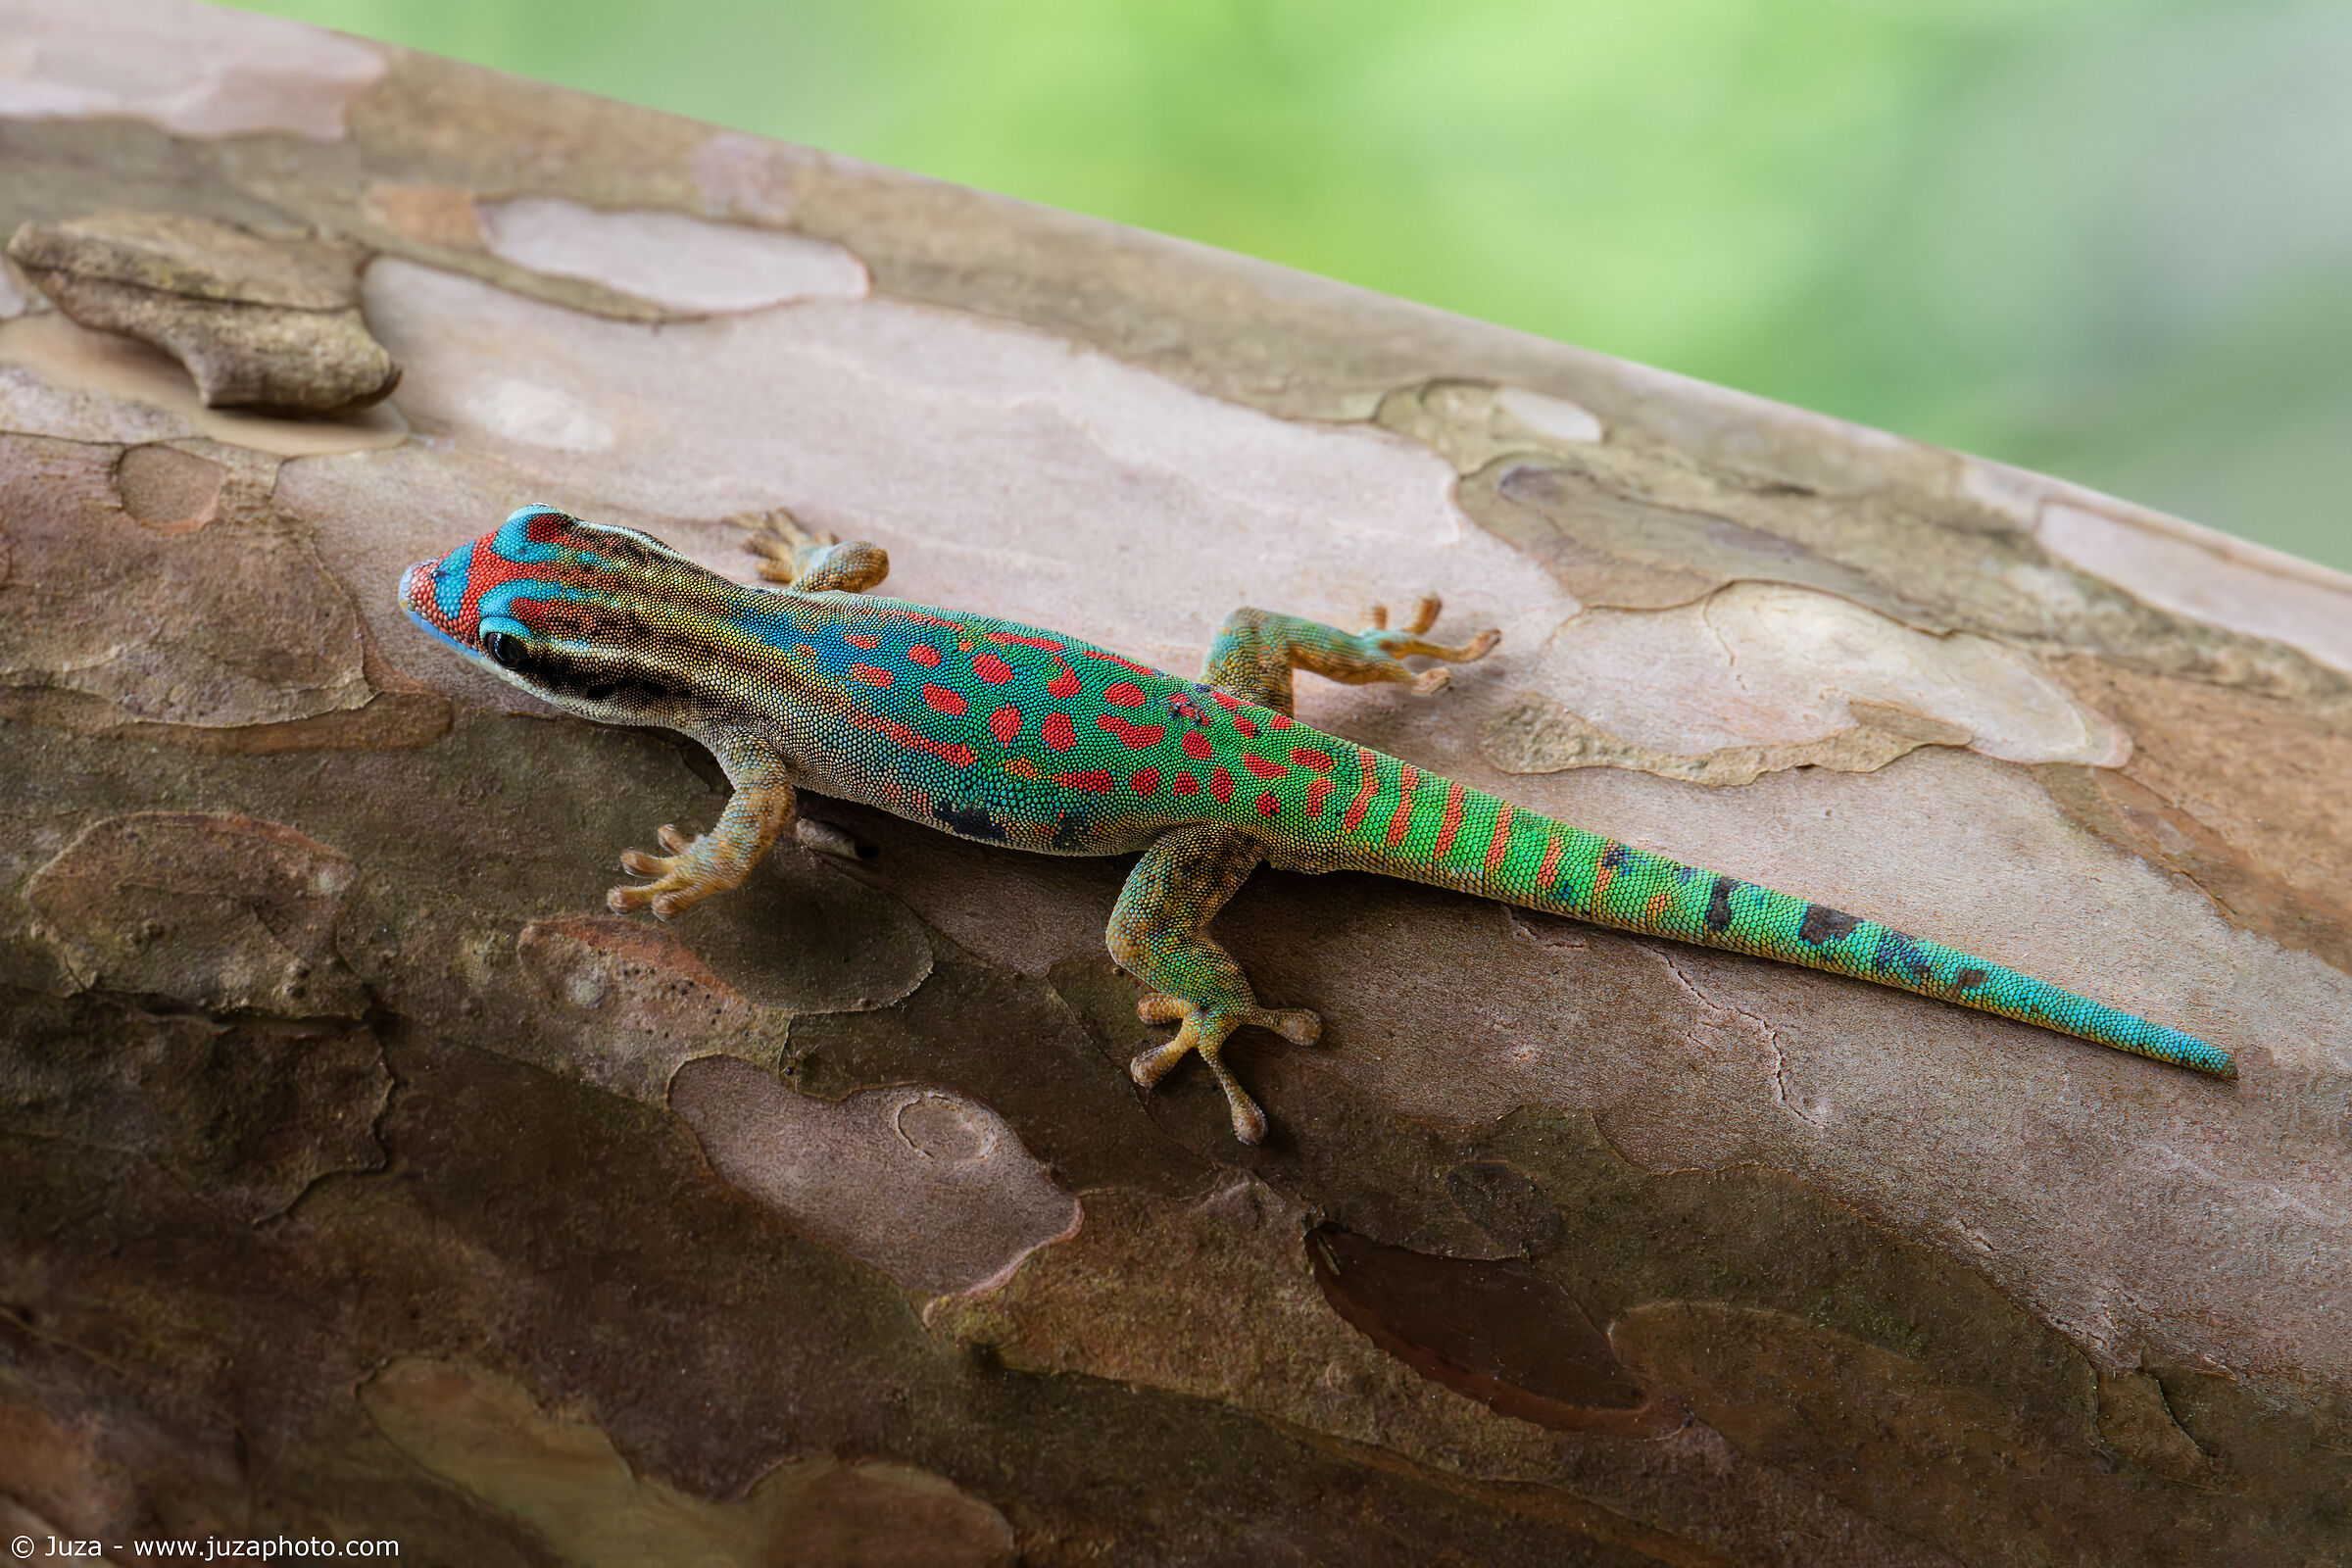 The wonderful Ornate Day Gecko (Phelsuma ornata)...